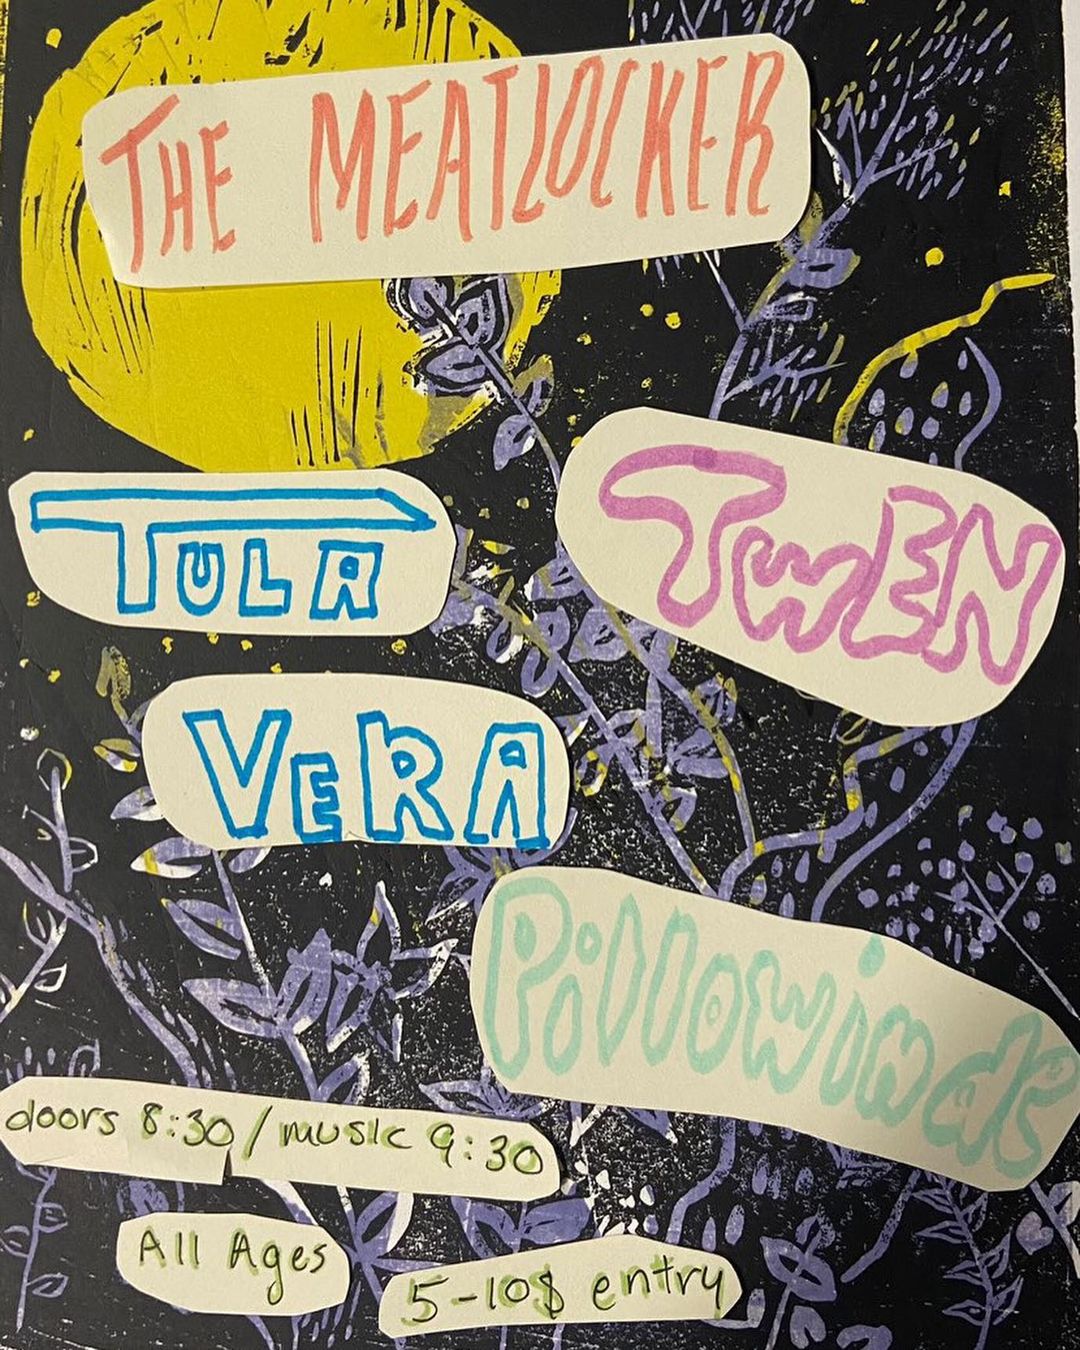 Twen / Tula Vera / Pillowinde at Meatlocker in Montclair, NJ on 7/26/2022